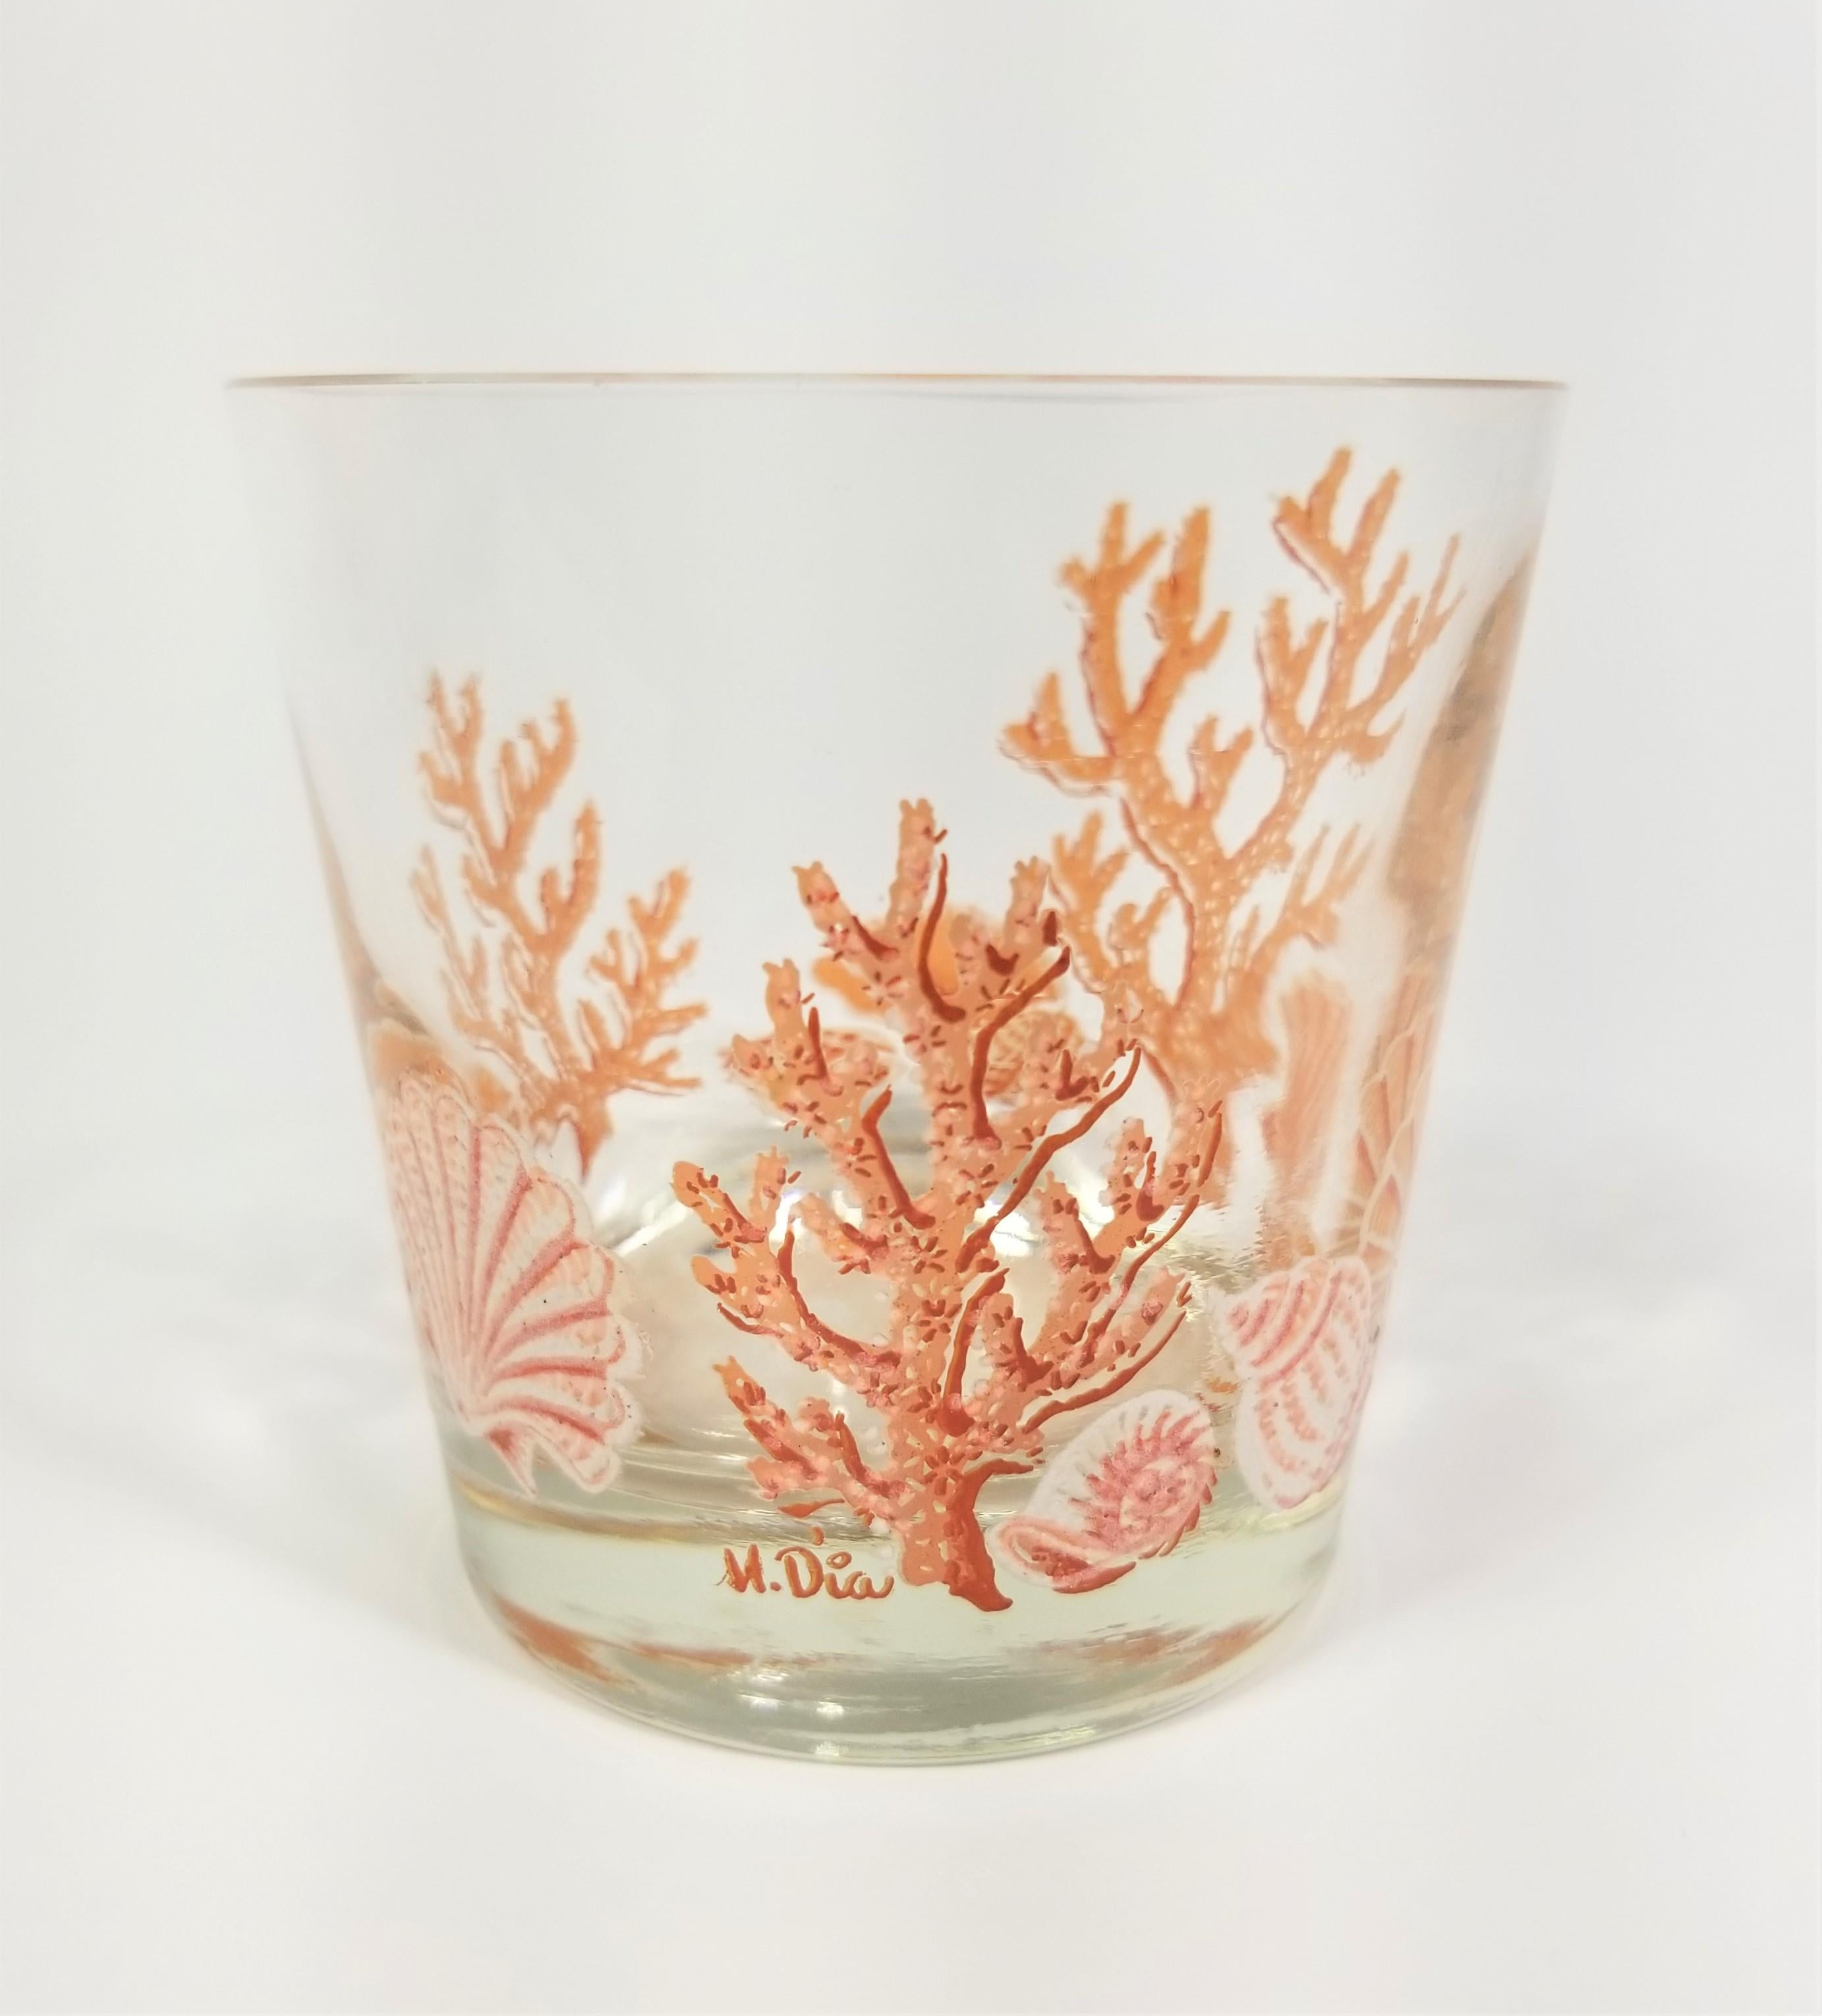 Libbey 1970s Glassware Barware Artist Signed M. Dia Seashell and Coral  8